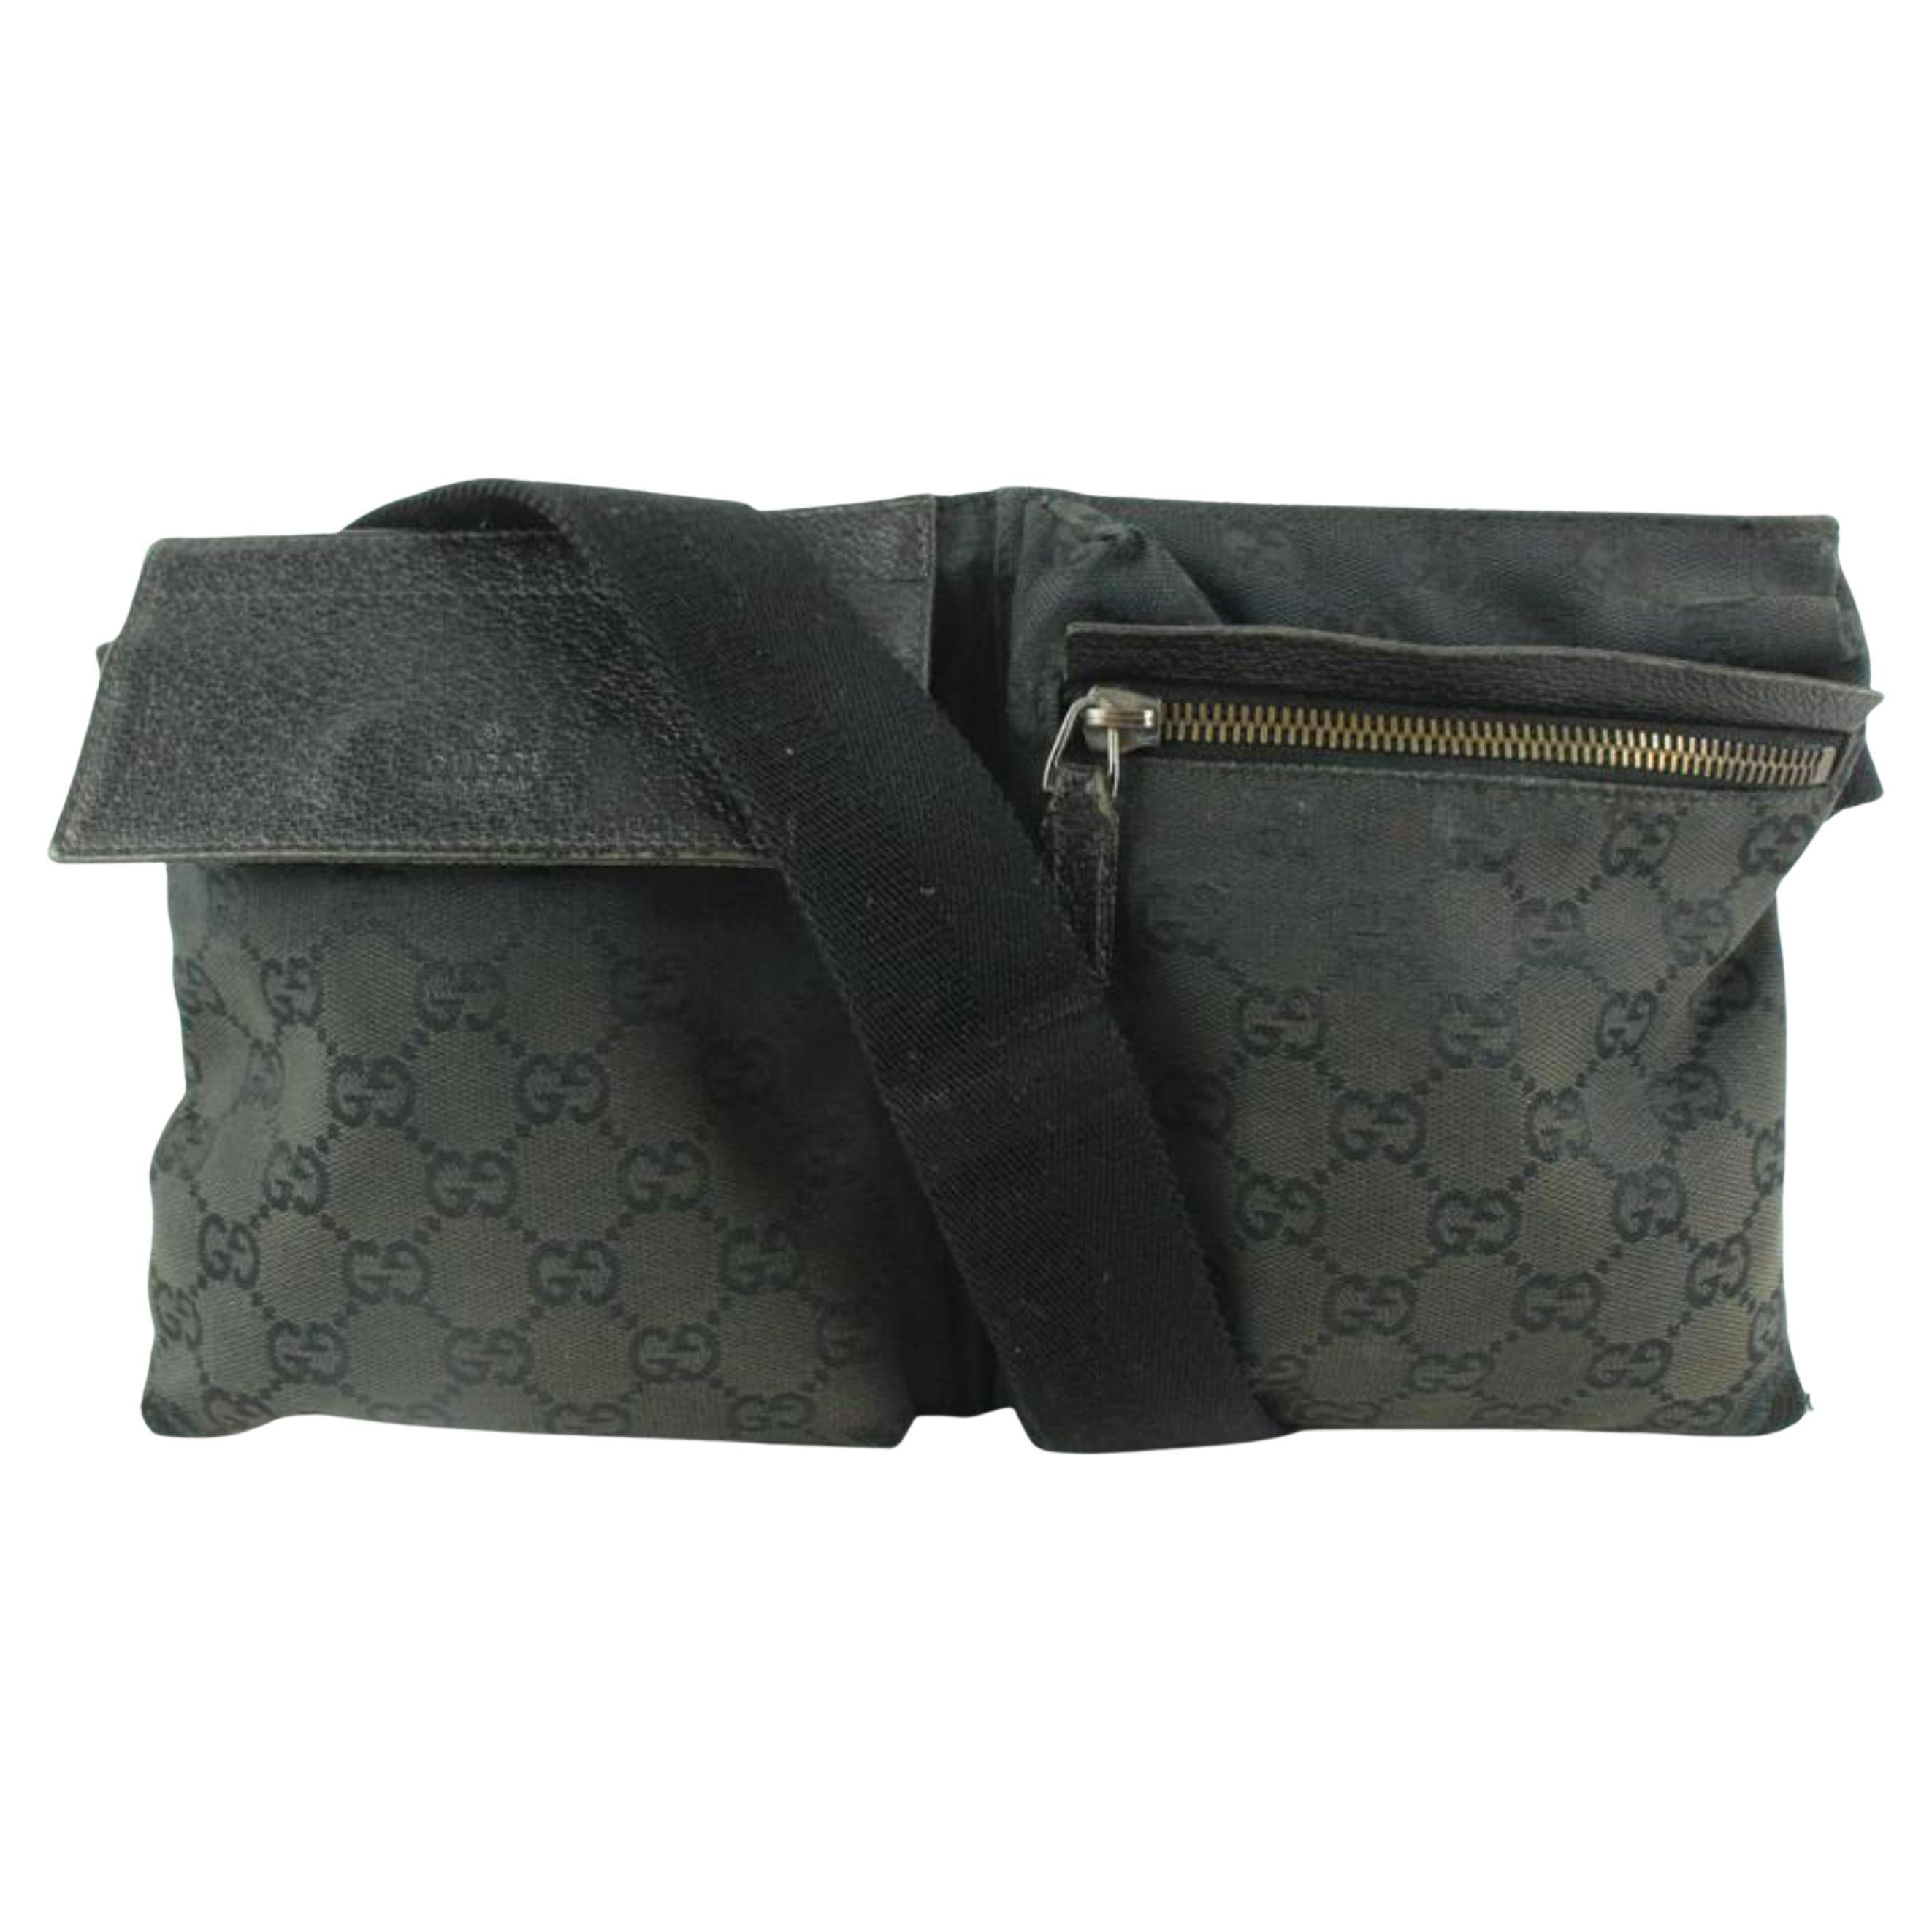 Gucci Black Monogram GG Belt Bag Fanny Pack Waist Pouch 16g29 For Sale